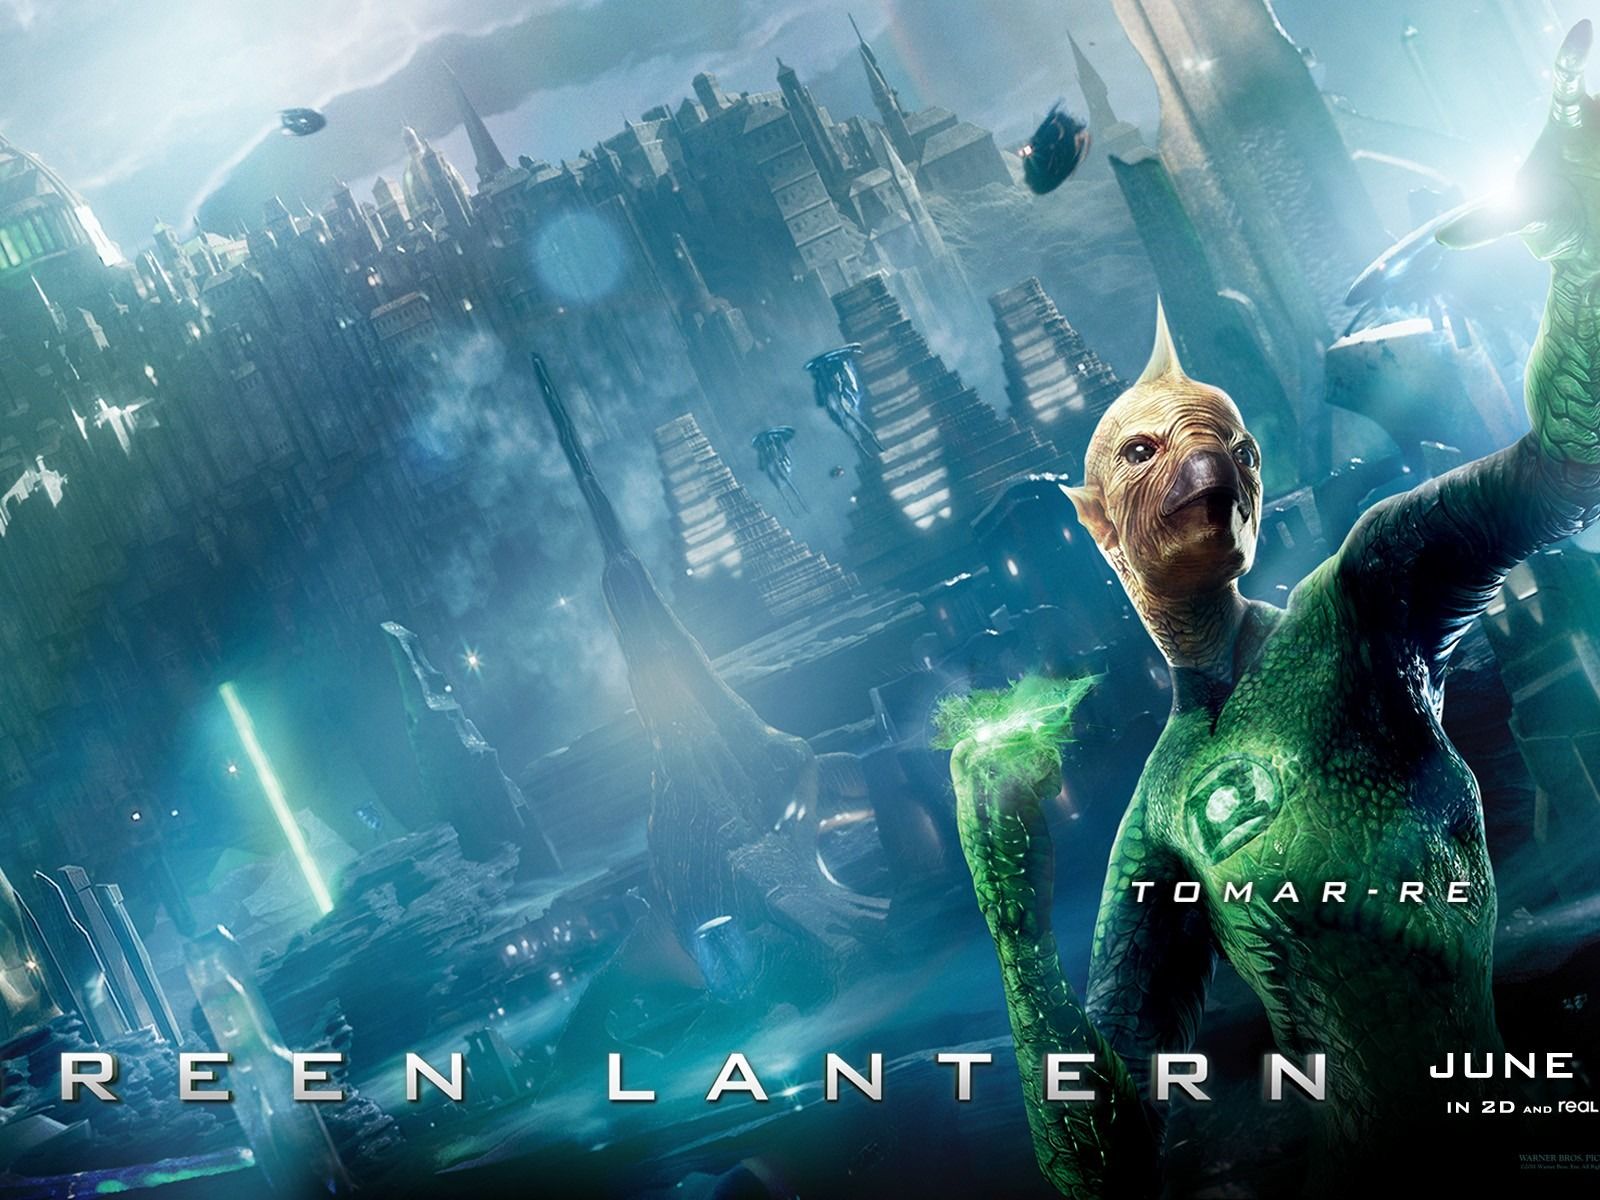 Green Lantern movie poster wallpaper 08